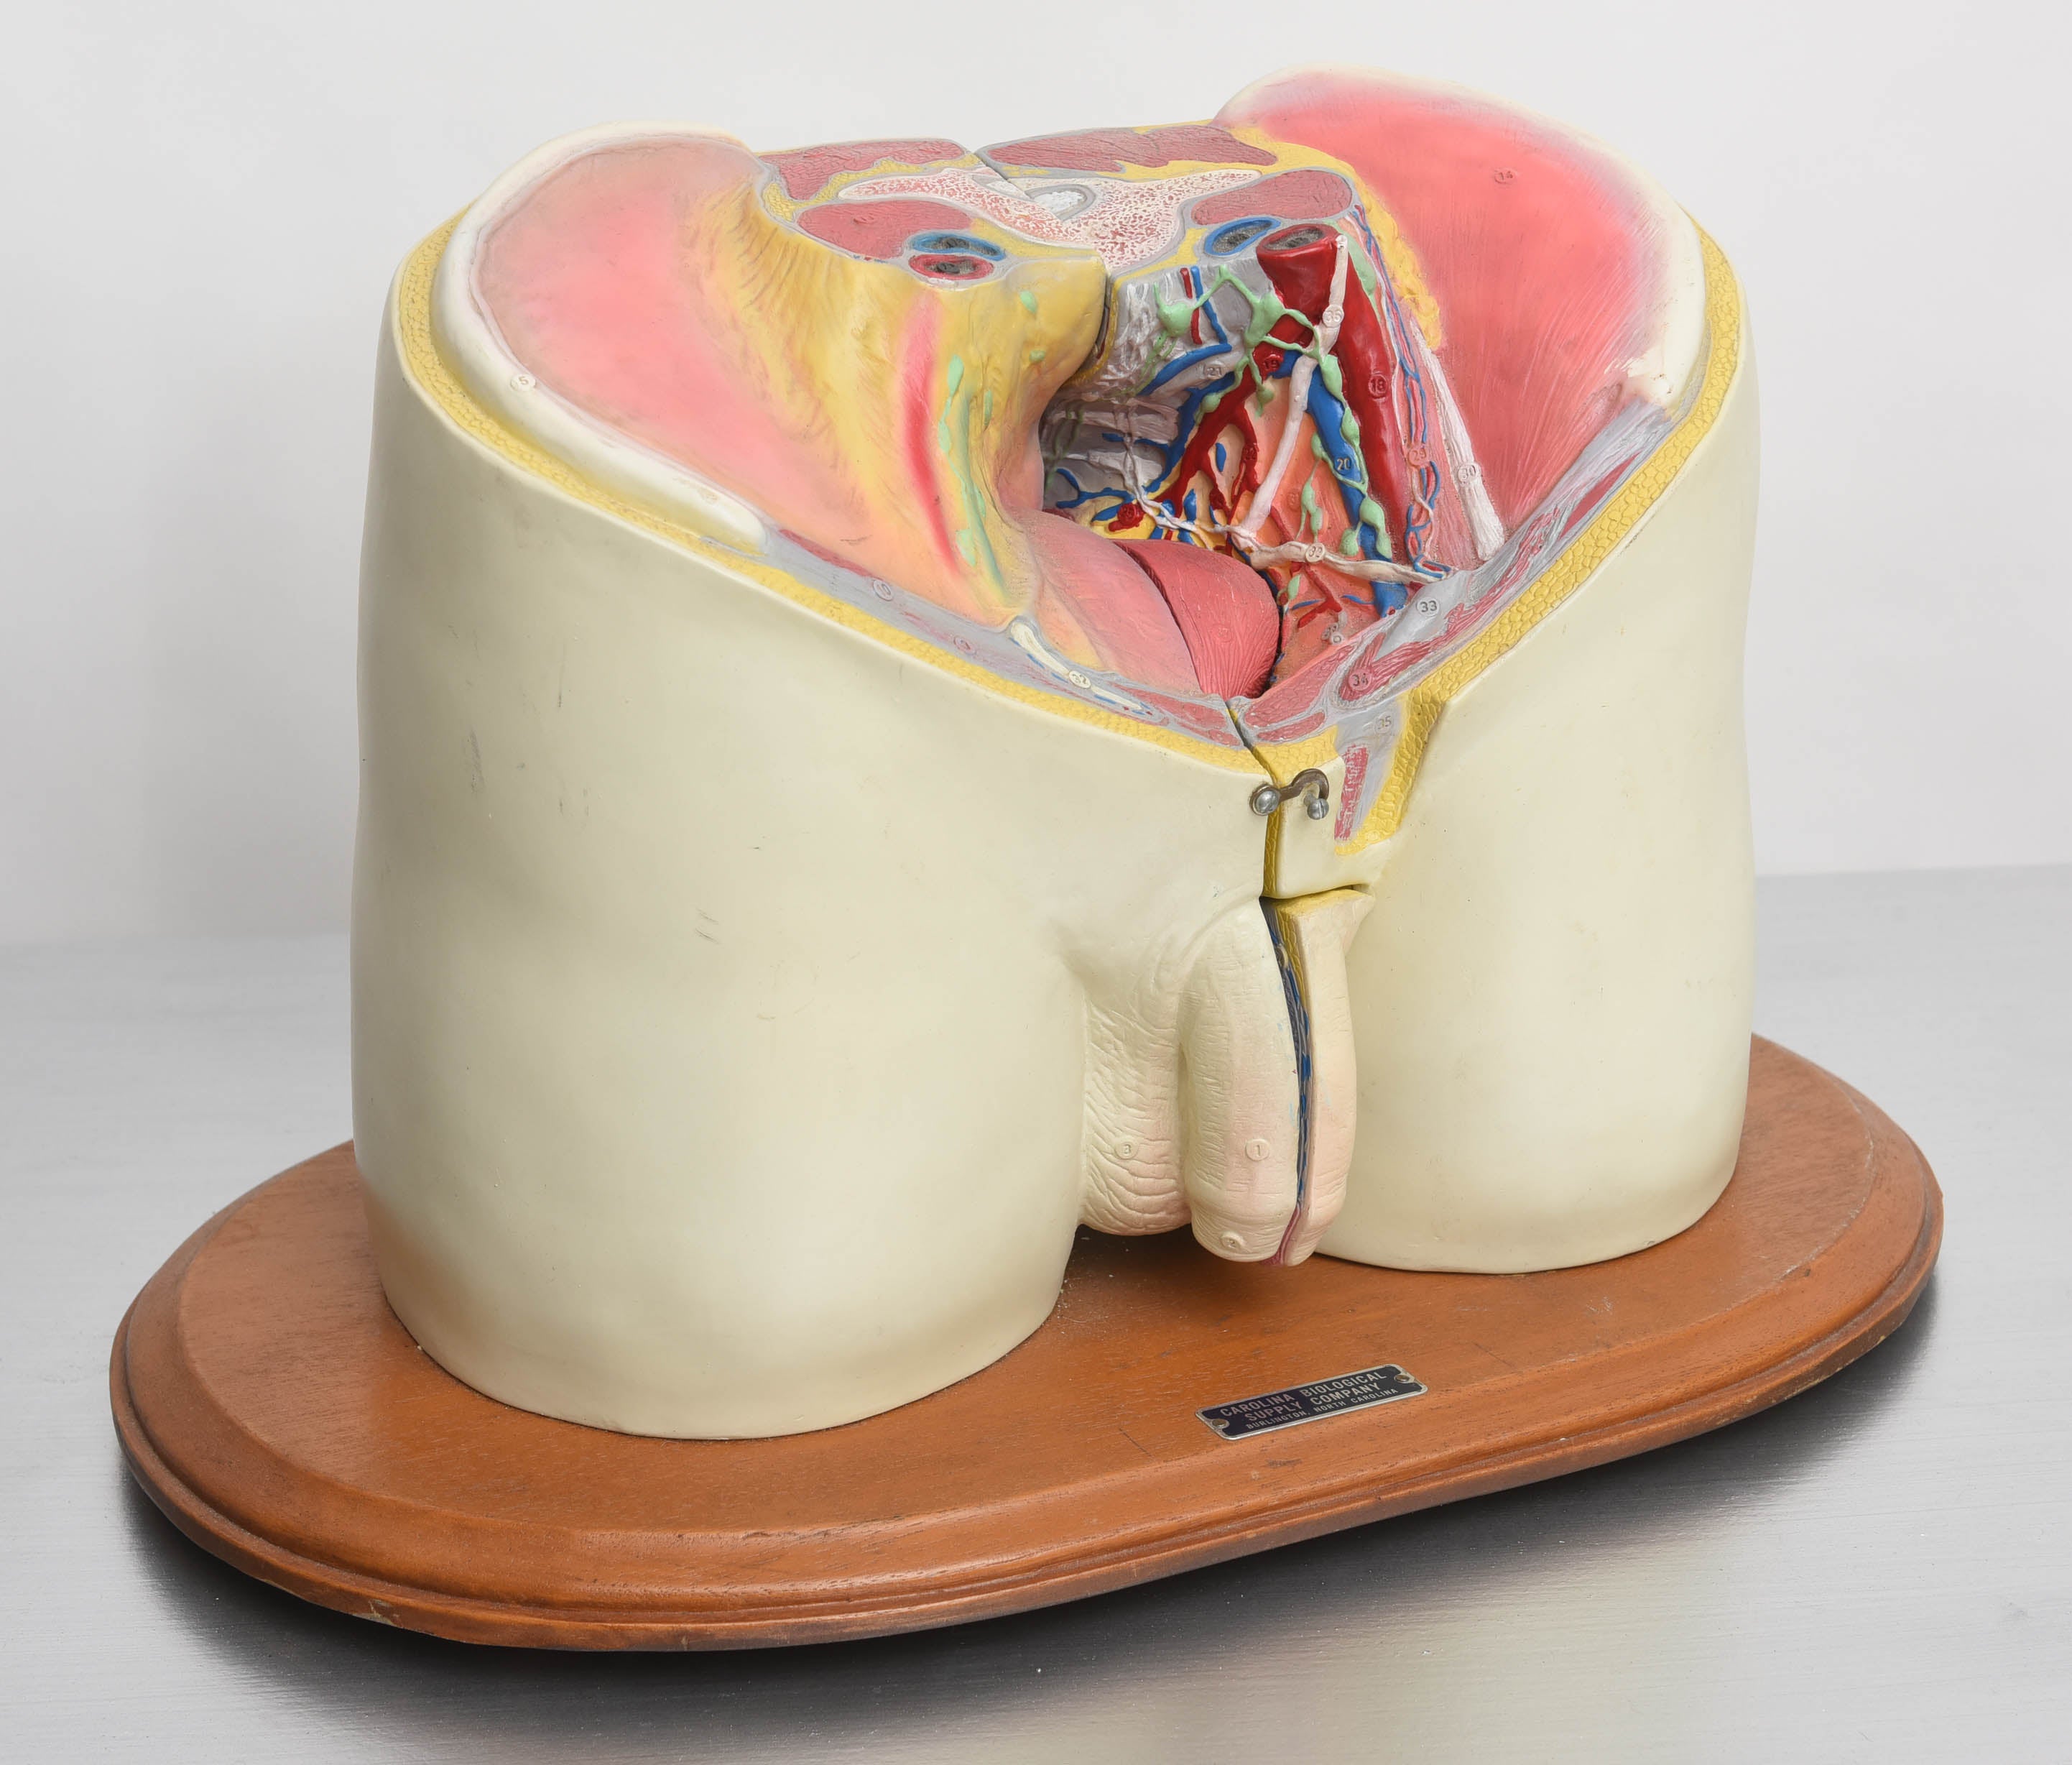 Anatomical Medical Display